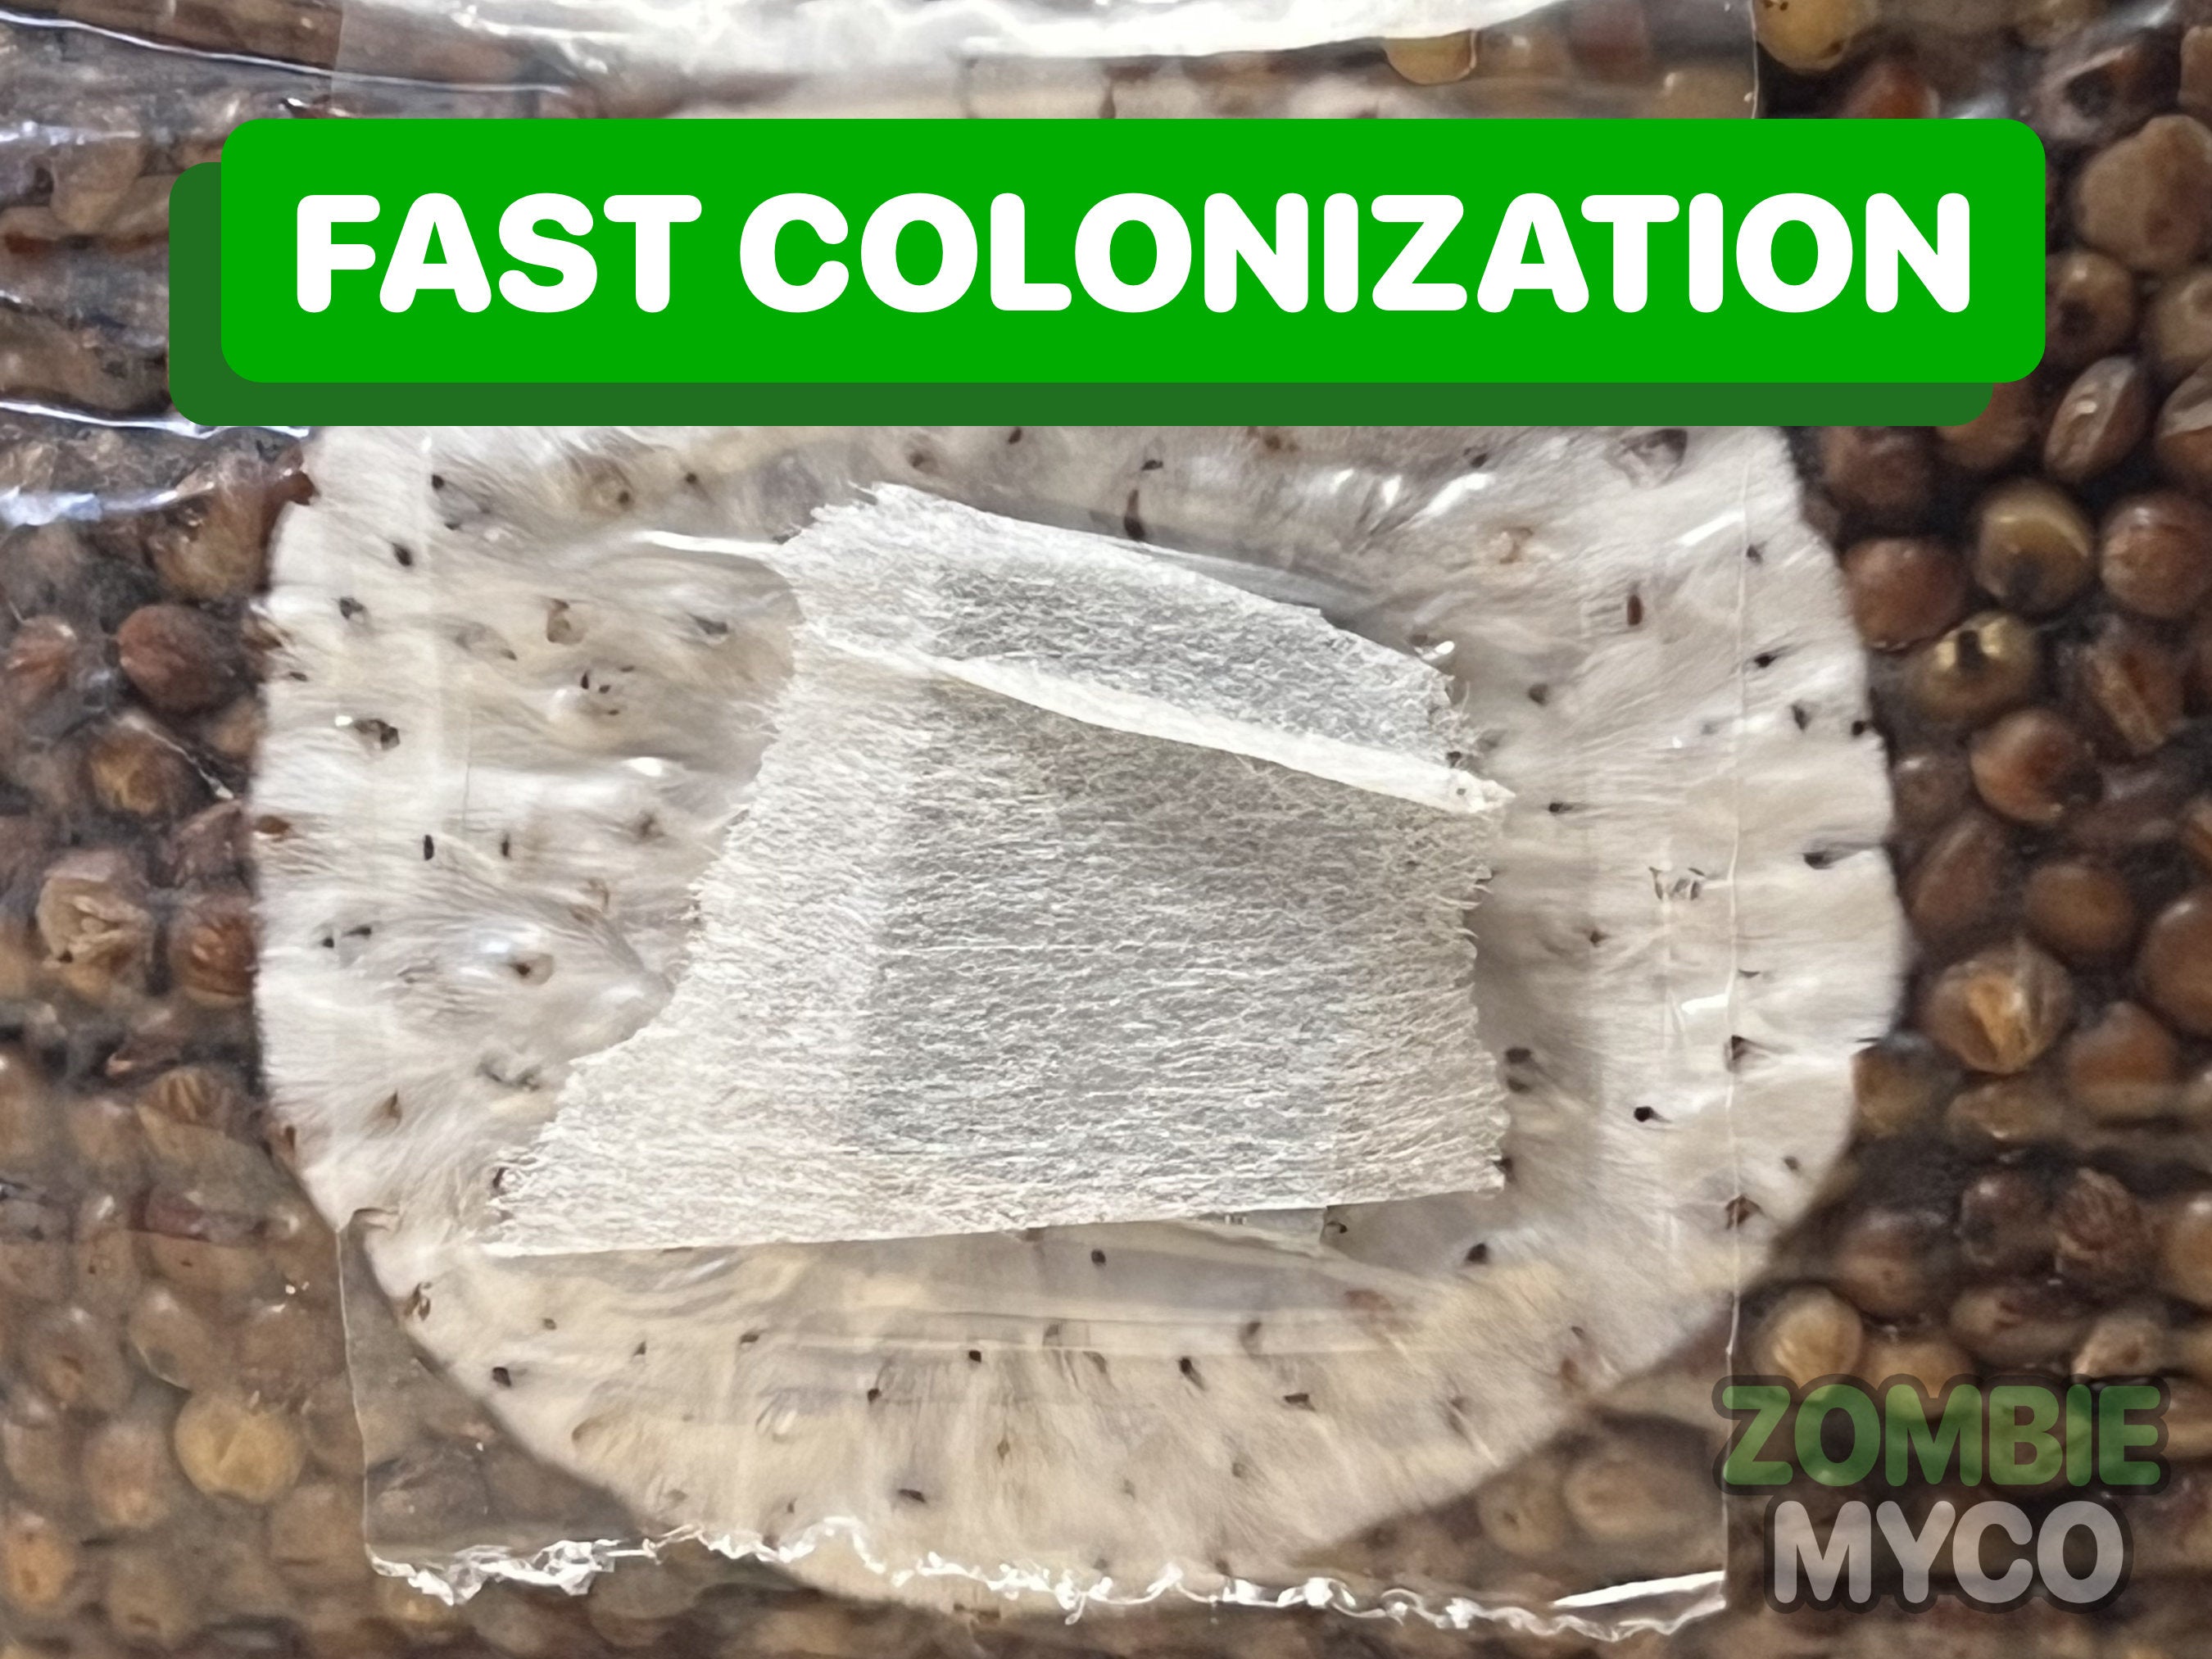 Fast Colonization Image - 5lb Mushroom Grow Bag - All In One Mushroom Grow Kit Media